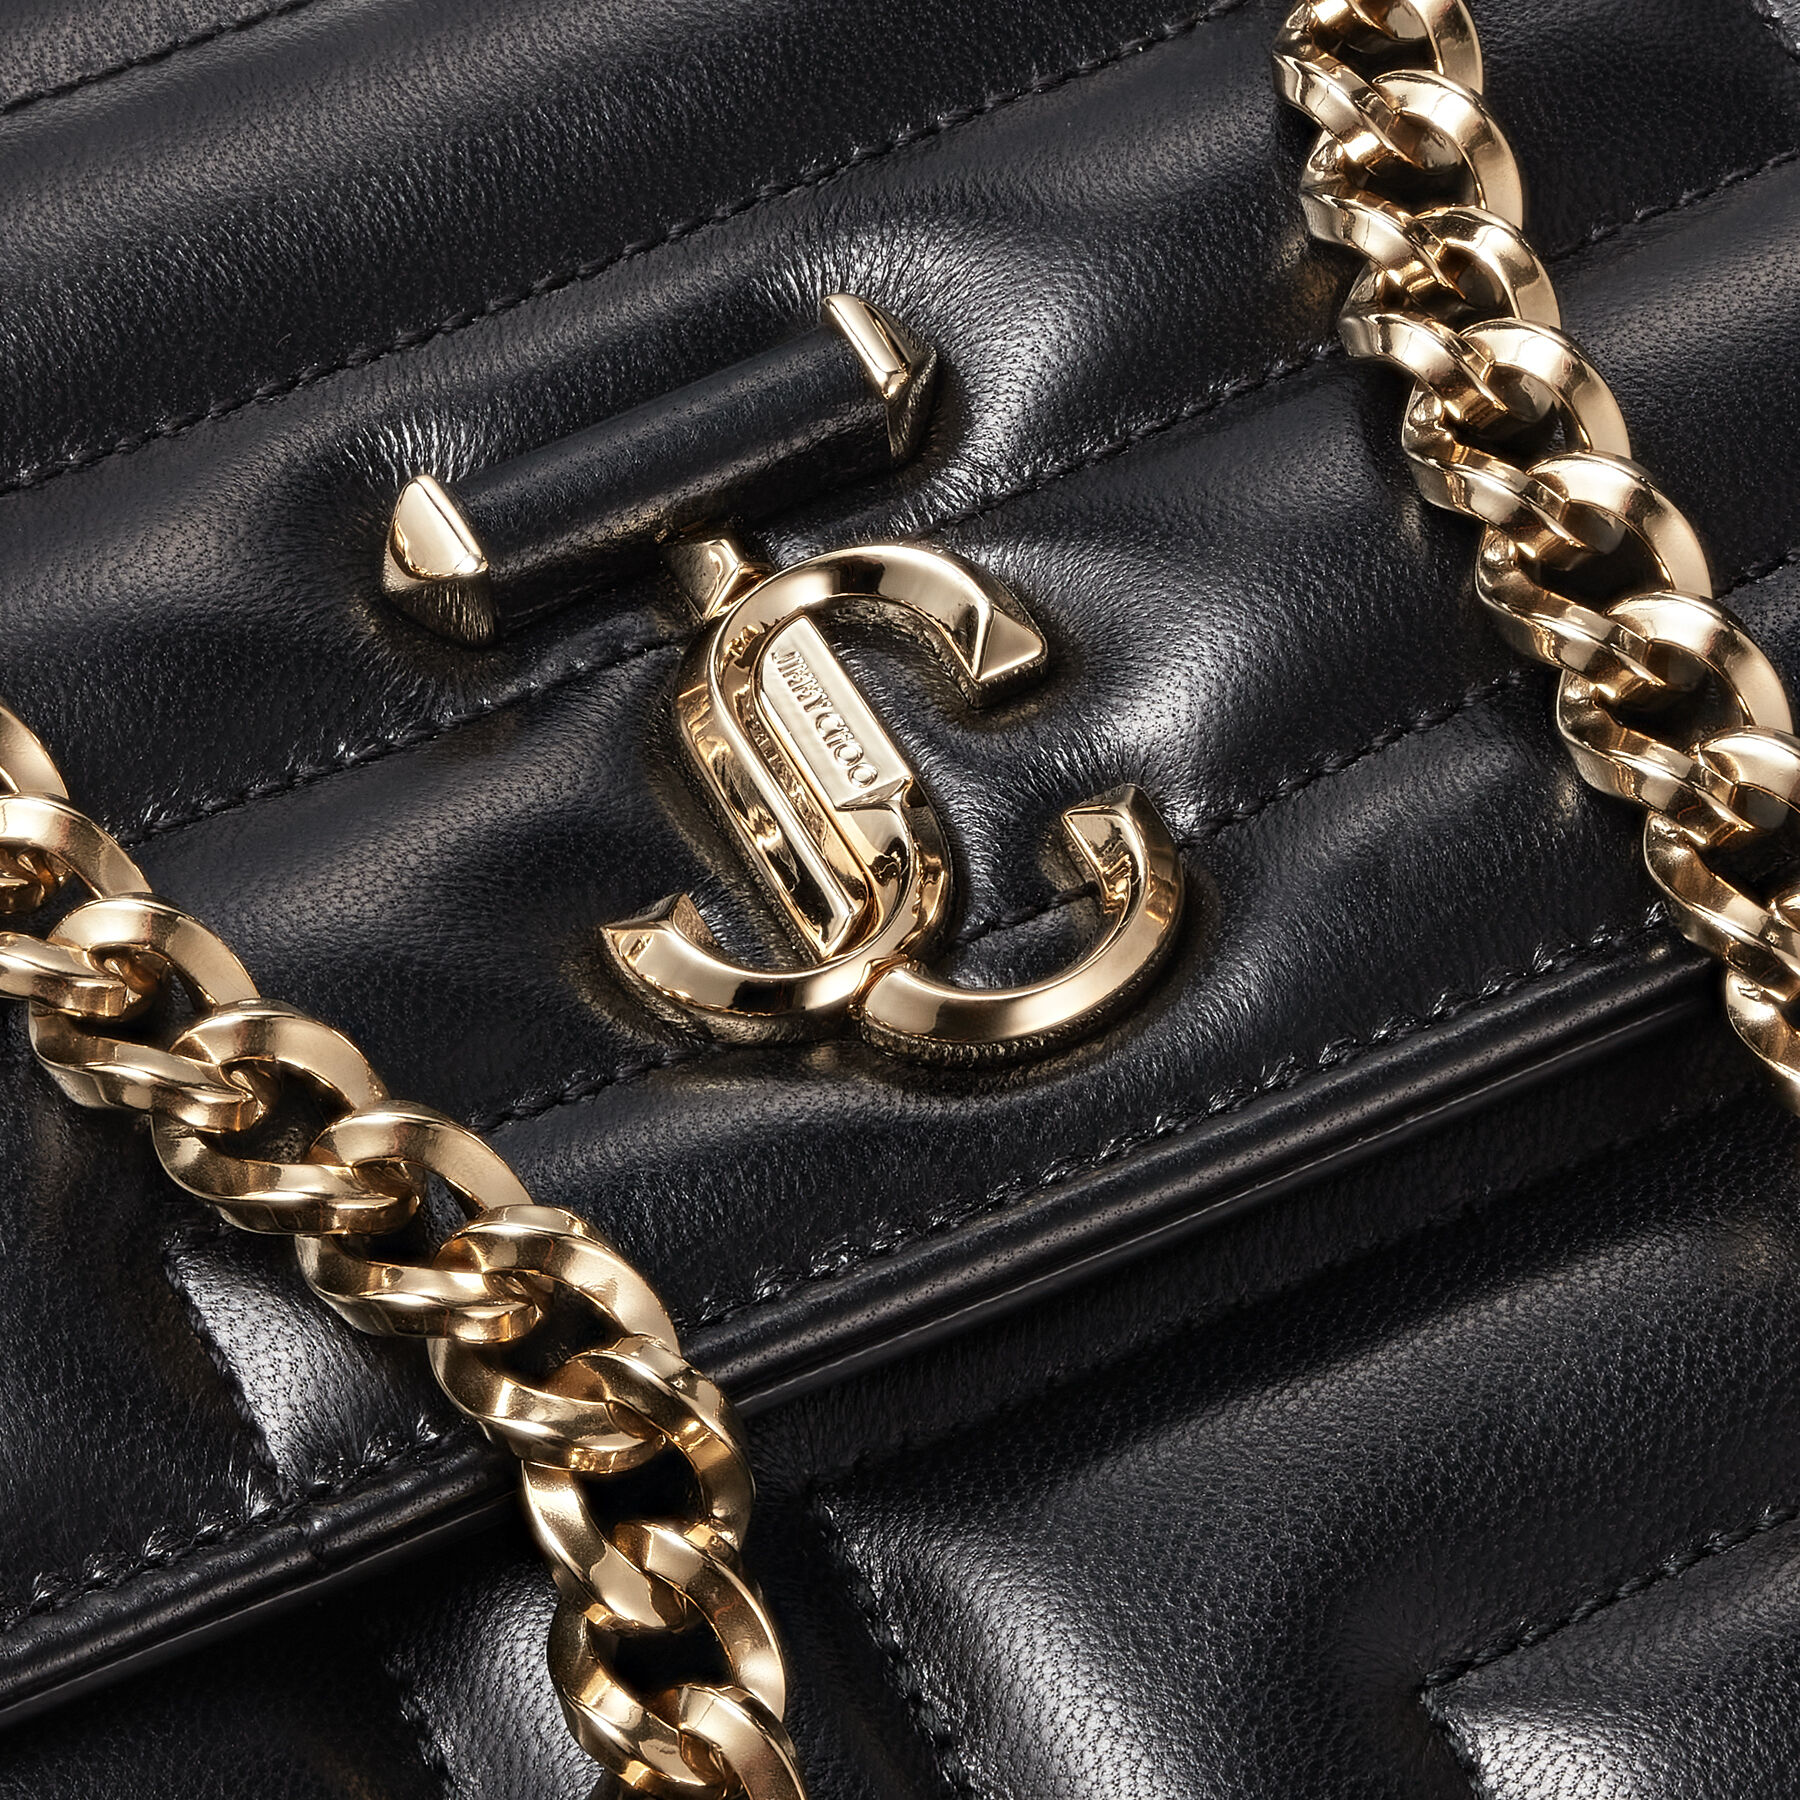 Black Nappa Nappa Leather Bag with Light Gold JC Emblem 